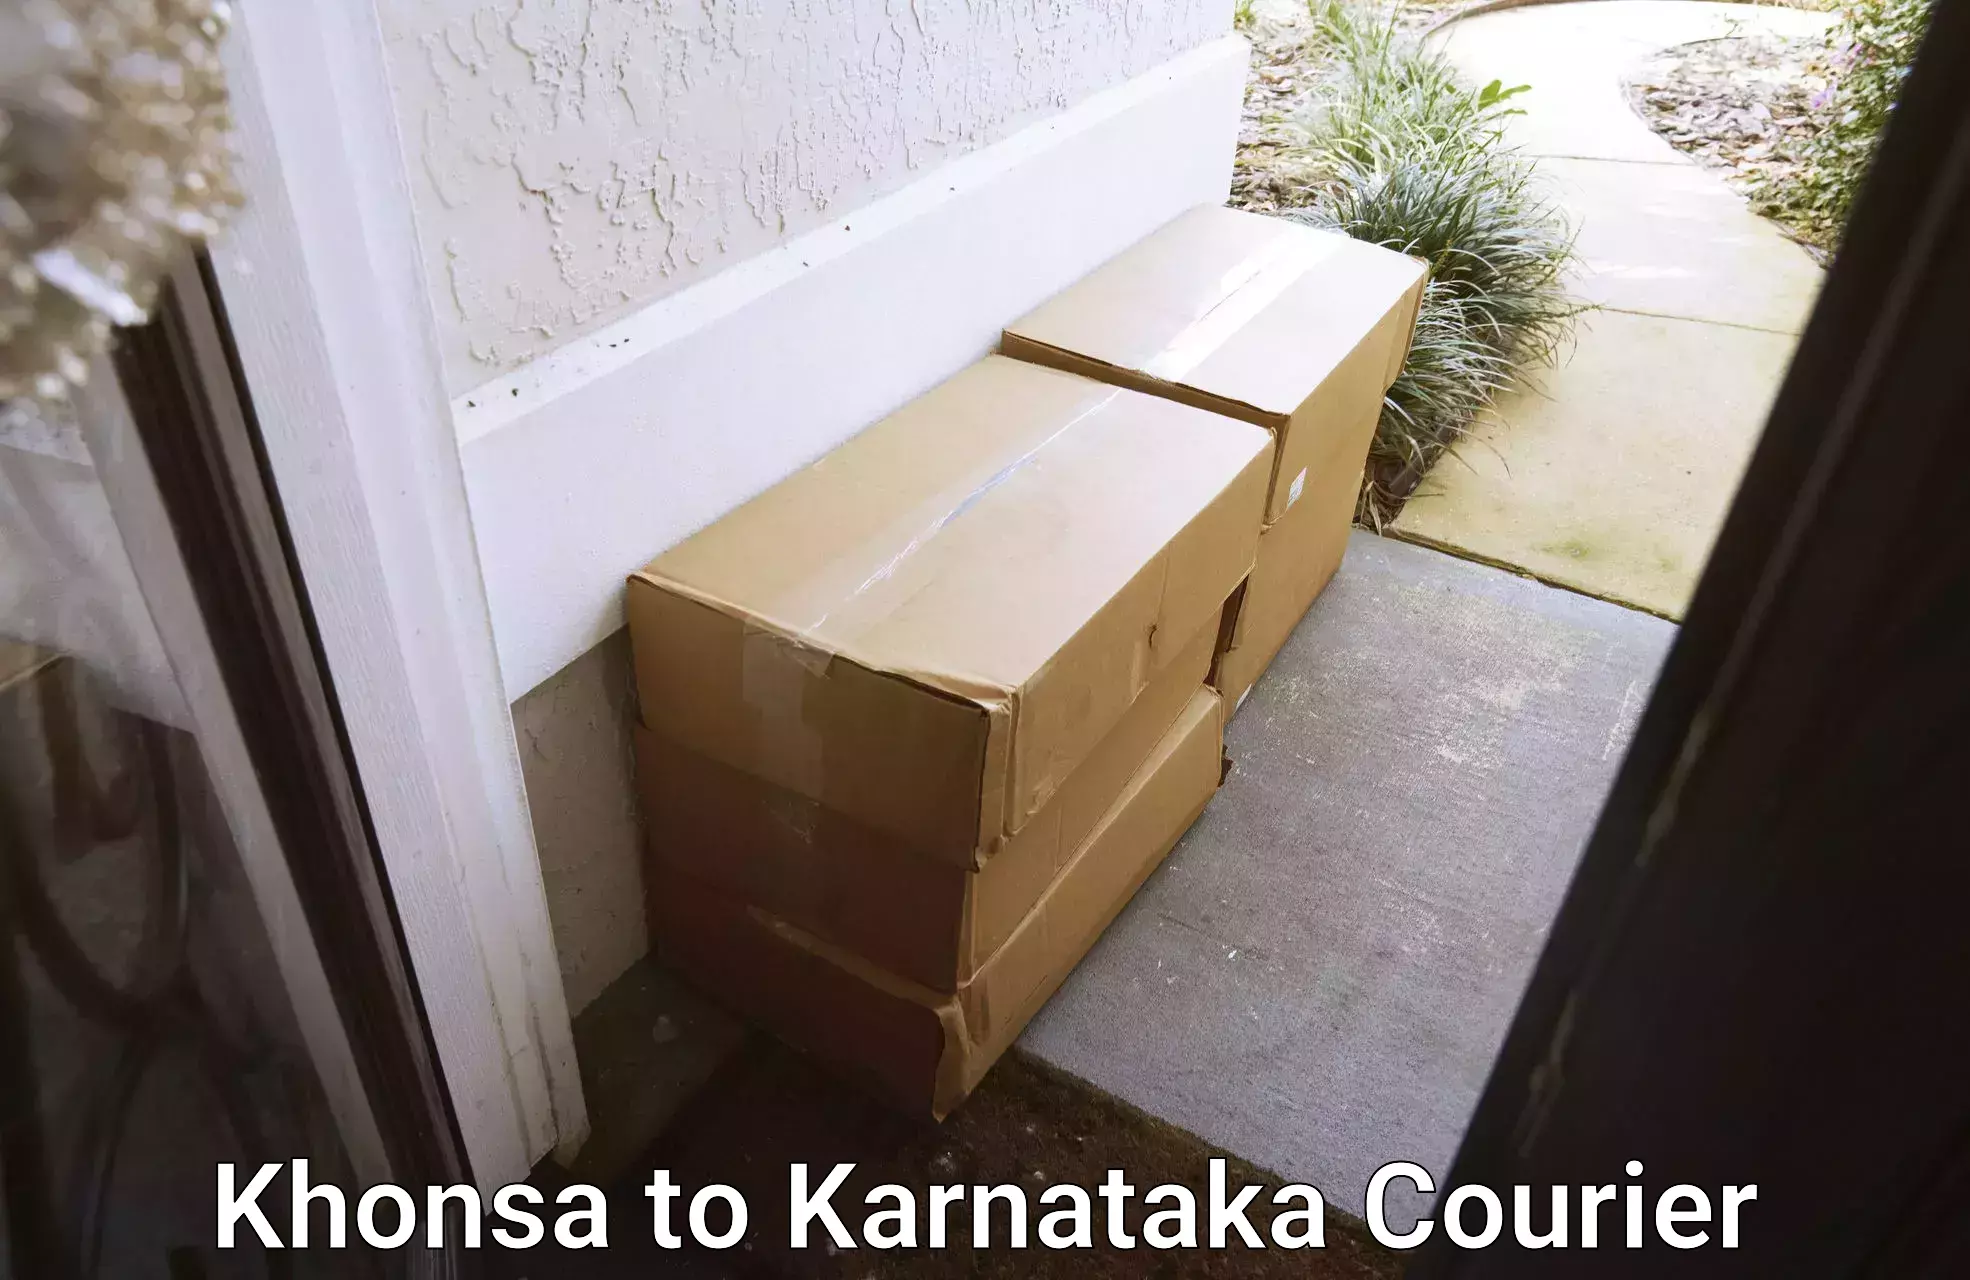 Courier service innovation Khonsa to Yadgiri